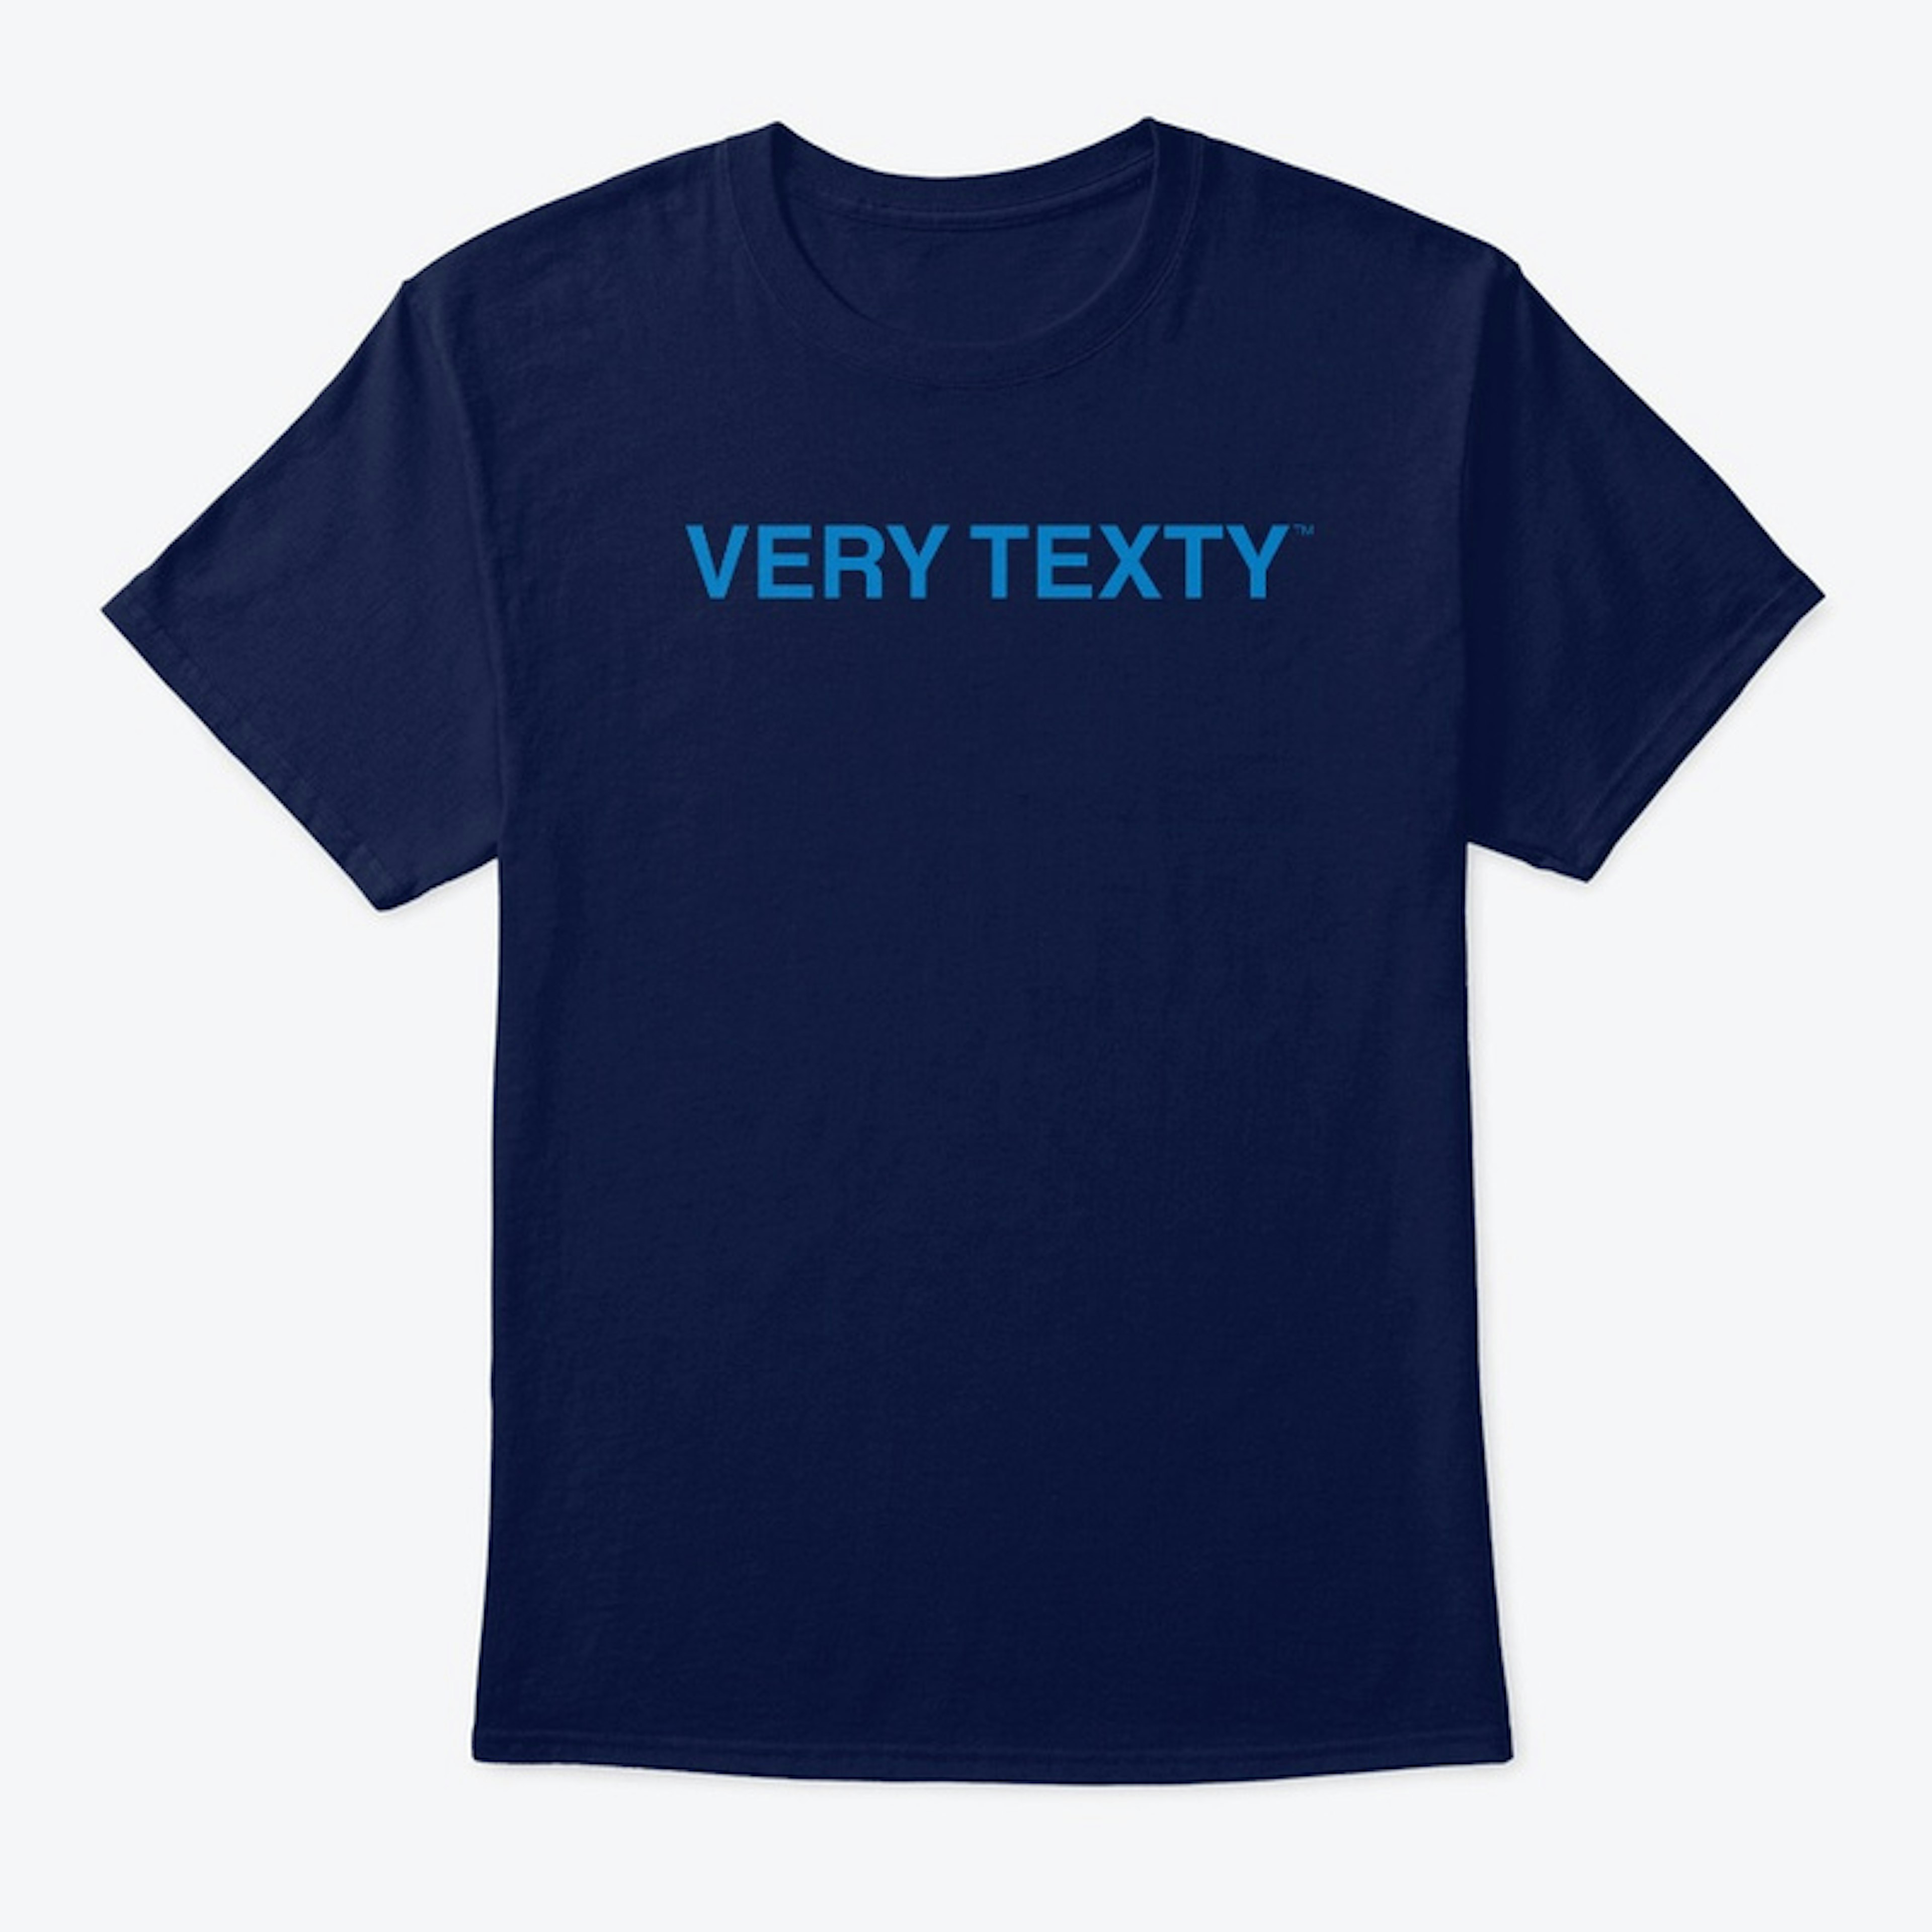 Very Texty Tee